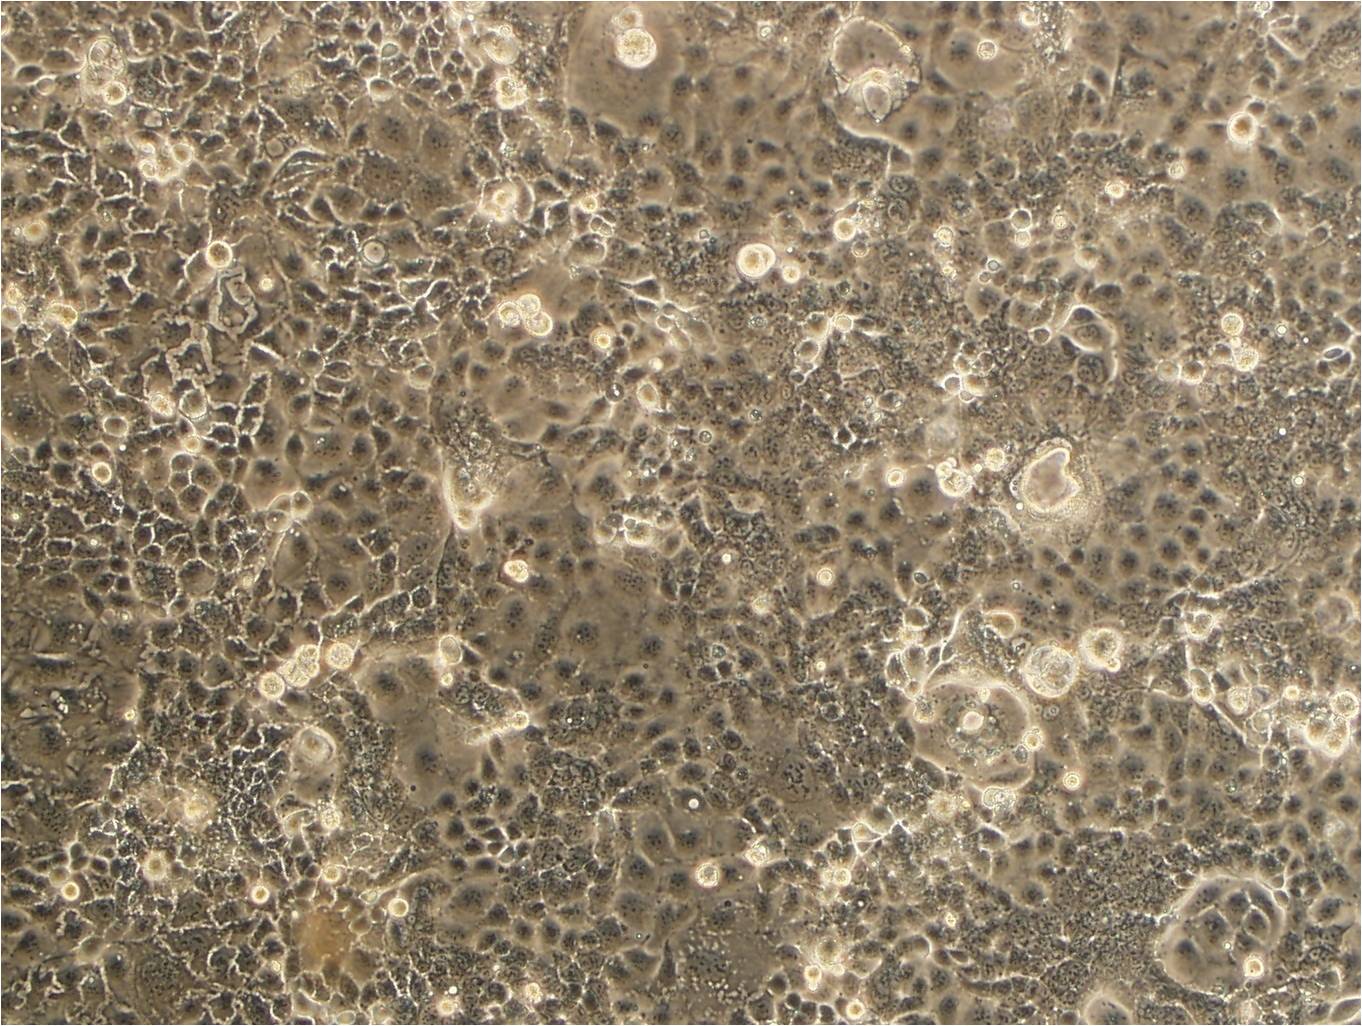 GCT epithelioid cells纤维组织瘤细胞系,GCT epithelioid cells